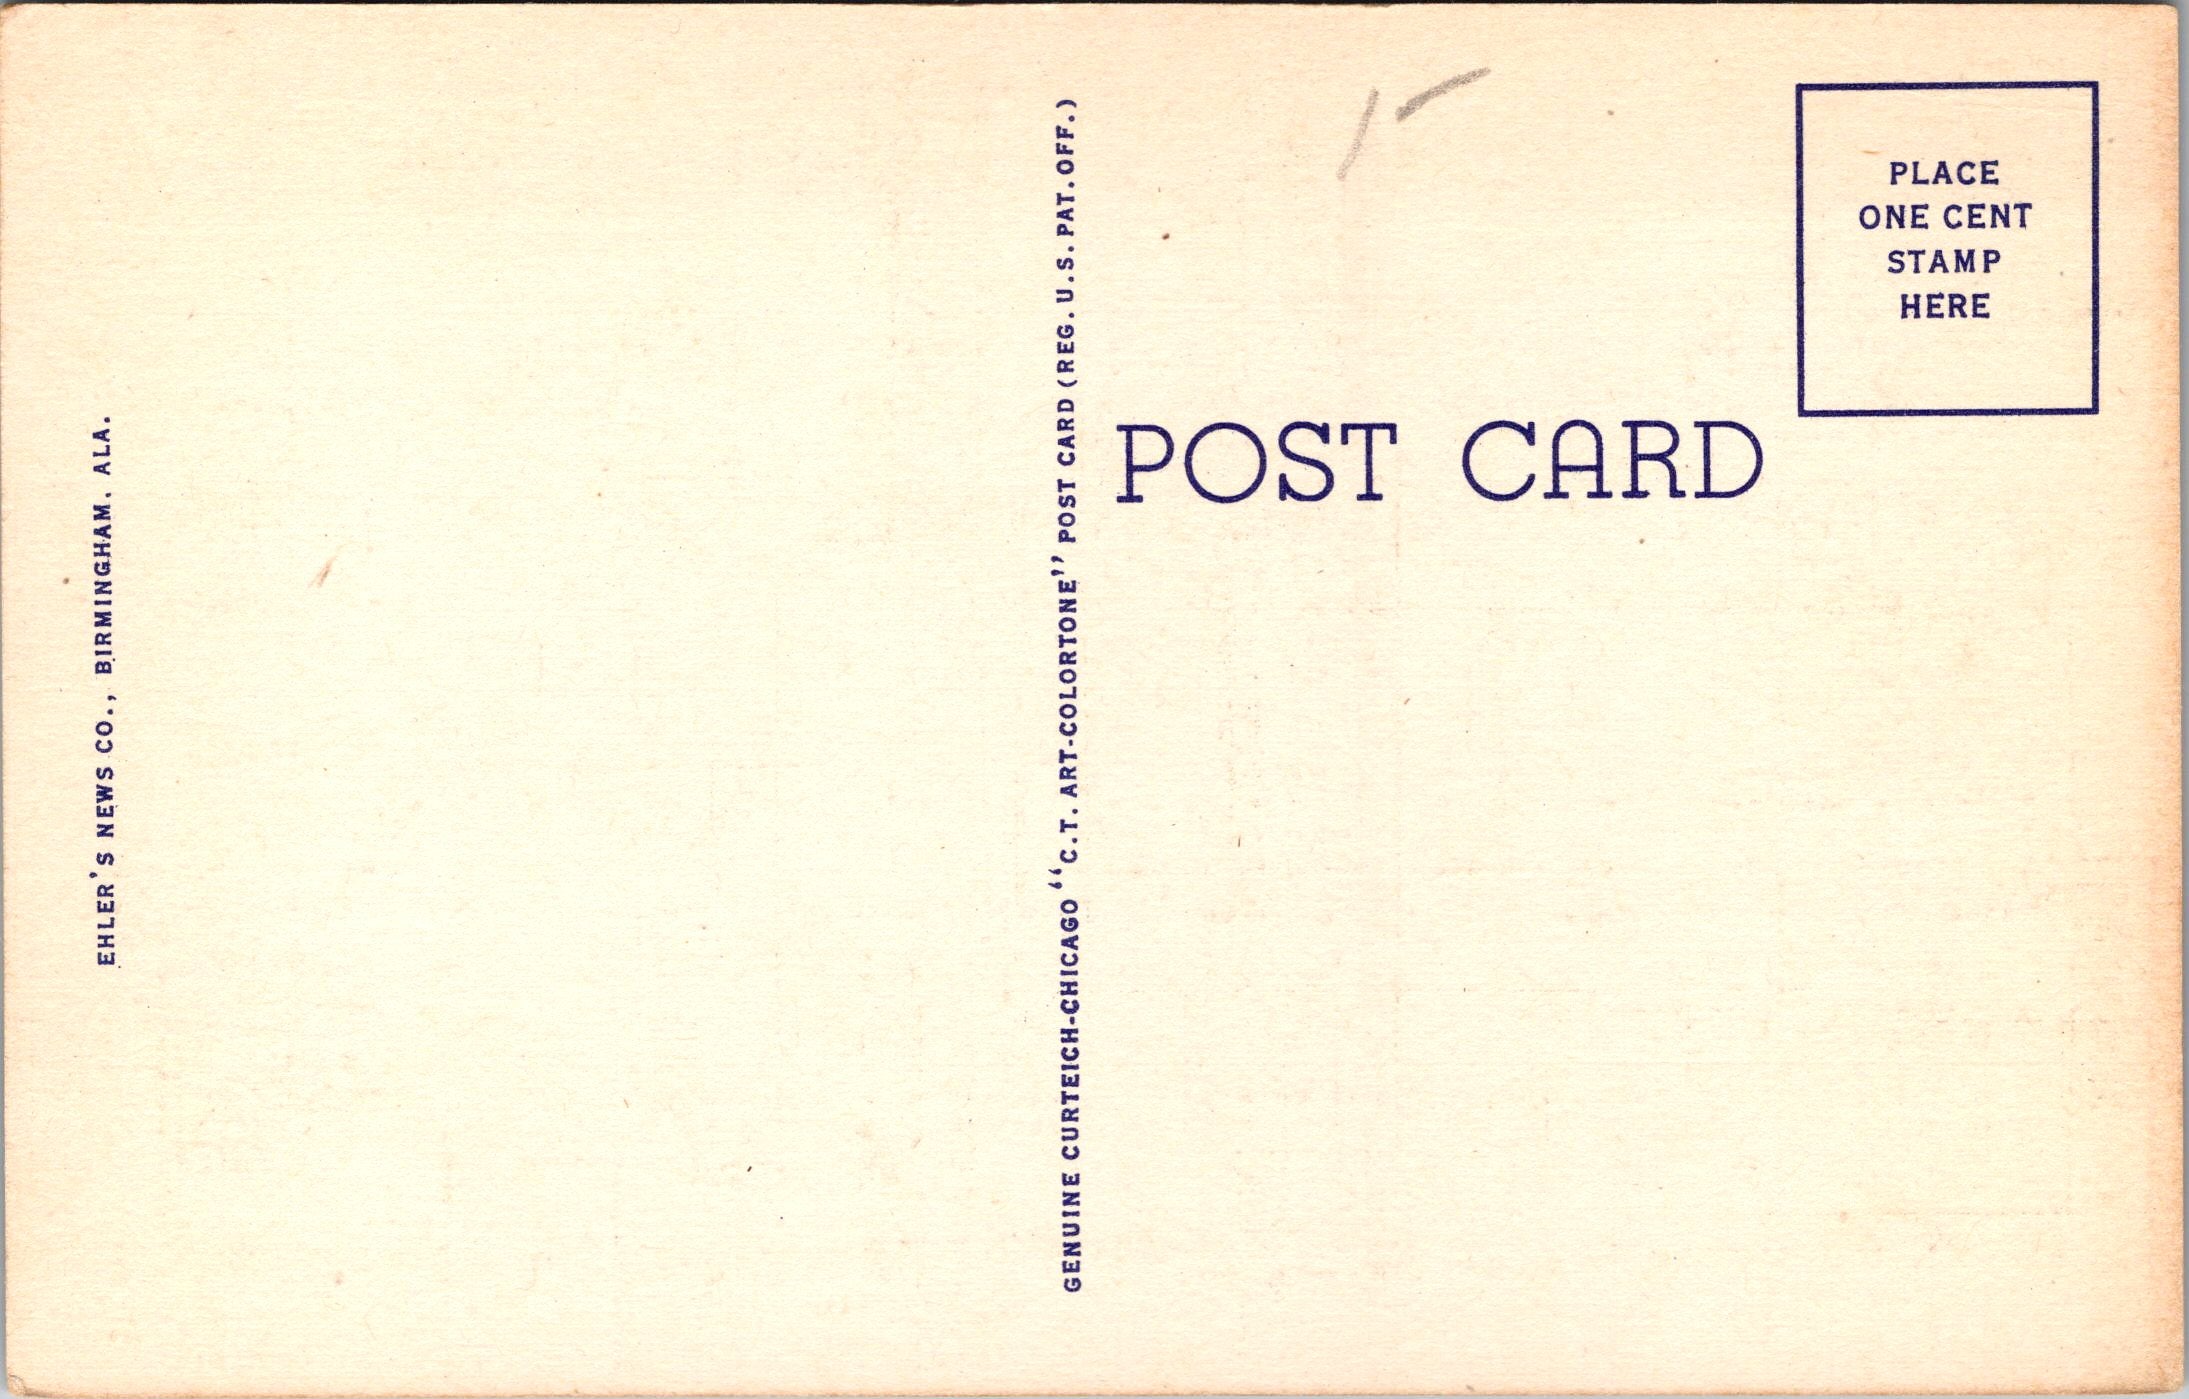 Jefferson County Courthouse, Bessemer, Alabama, USA, Vintage Post Card